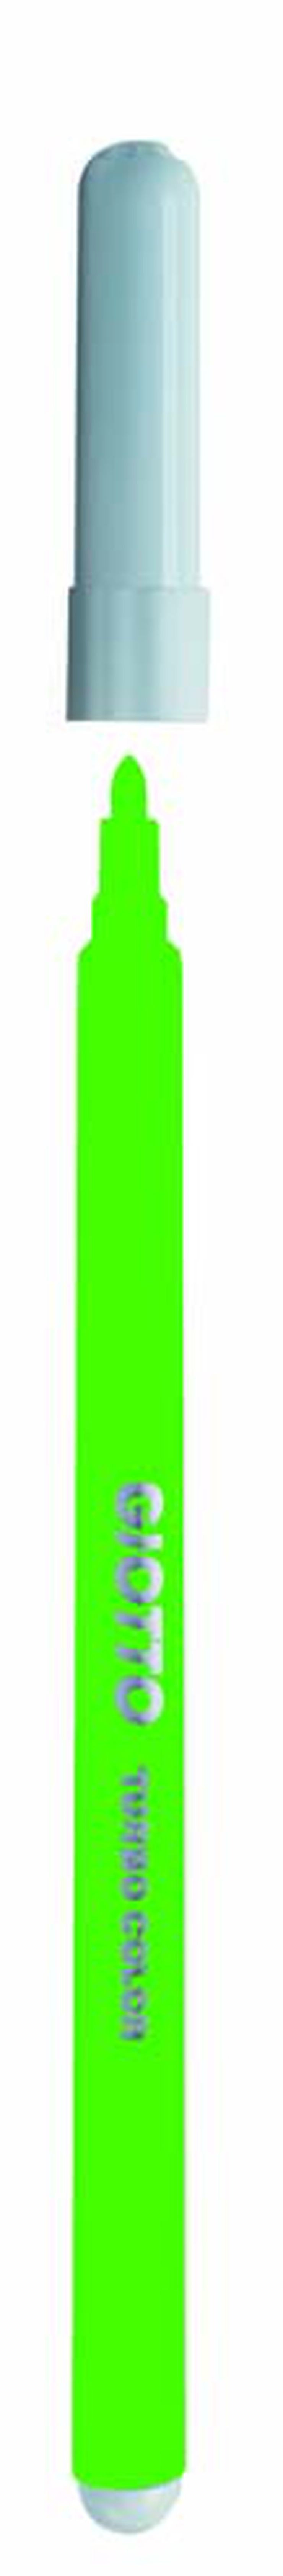 Retolador Giotto Turbo Color verd clar 12u